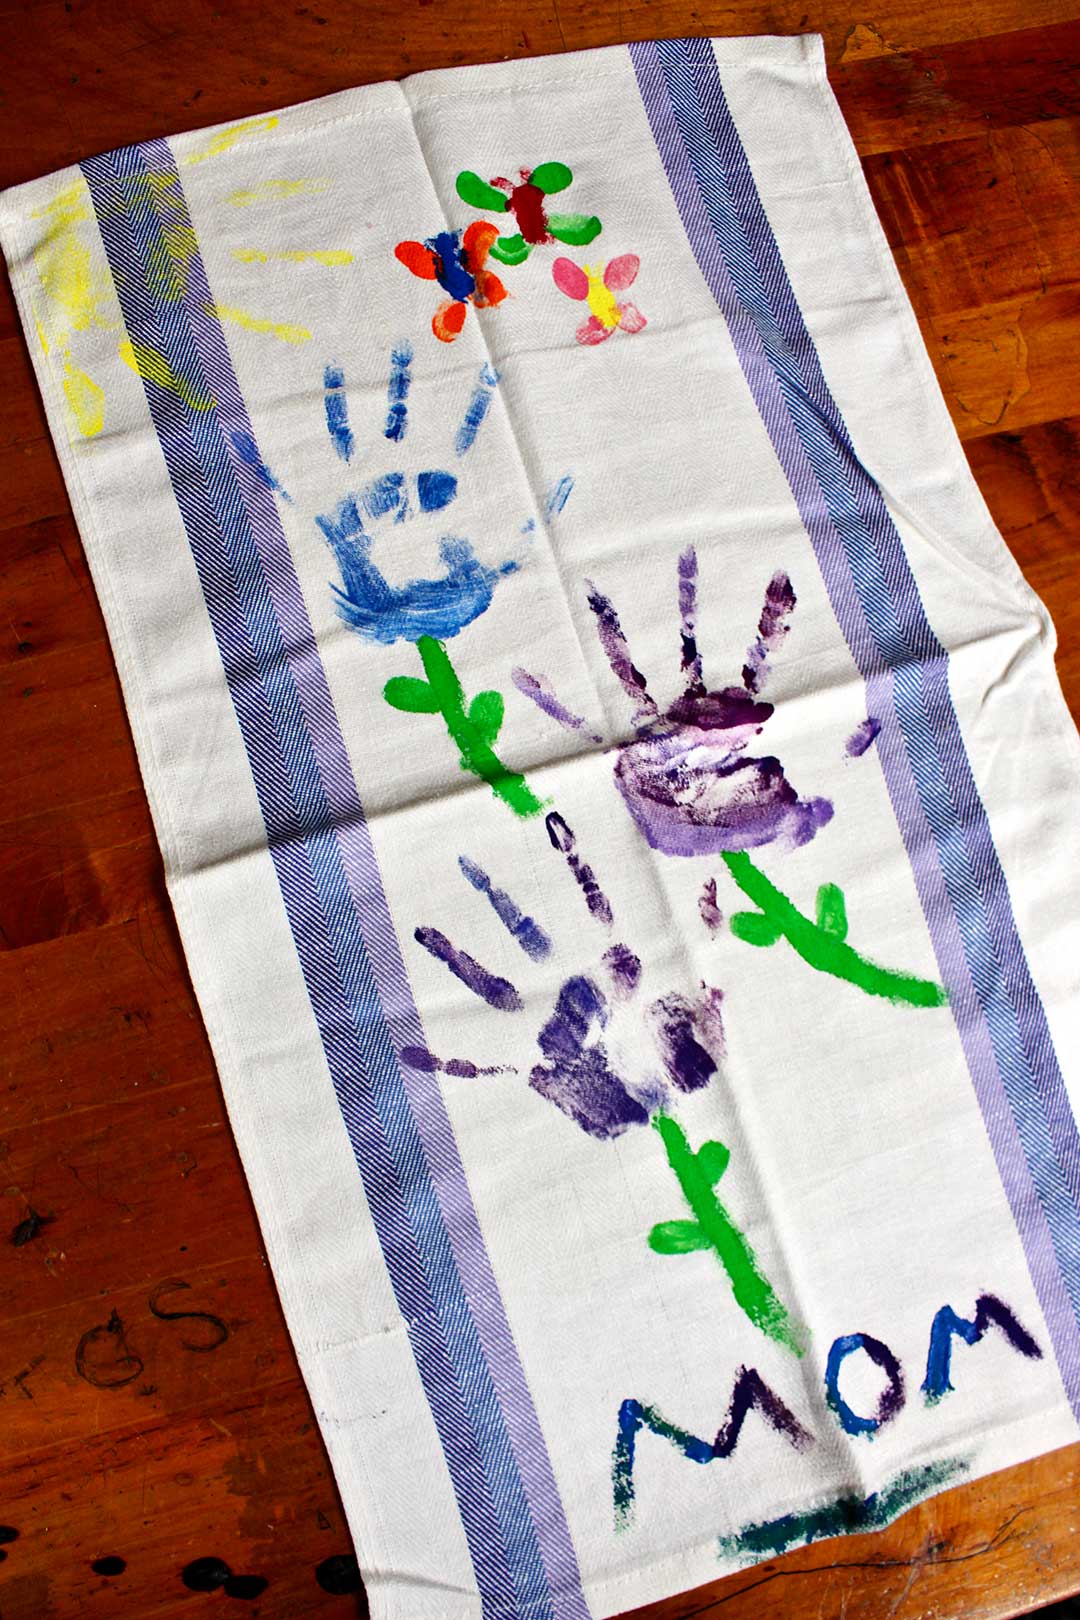 https://welcometonanas.com/wp-content/uploads/2021/04/Welcome-to-Nanas-Handprint-Flower-Dish-Towel-Mothers-Day-Gift-DIY-Kids-Paint-Craft-Project-3.jpg